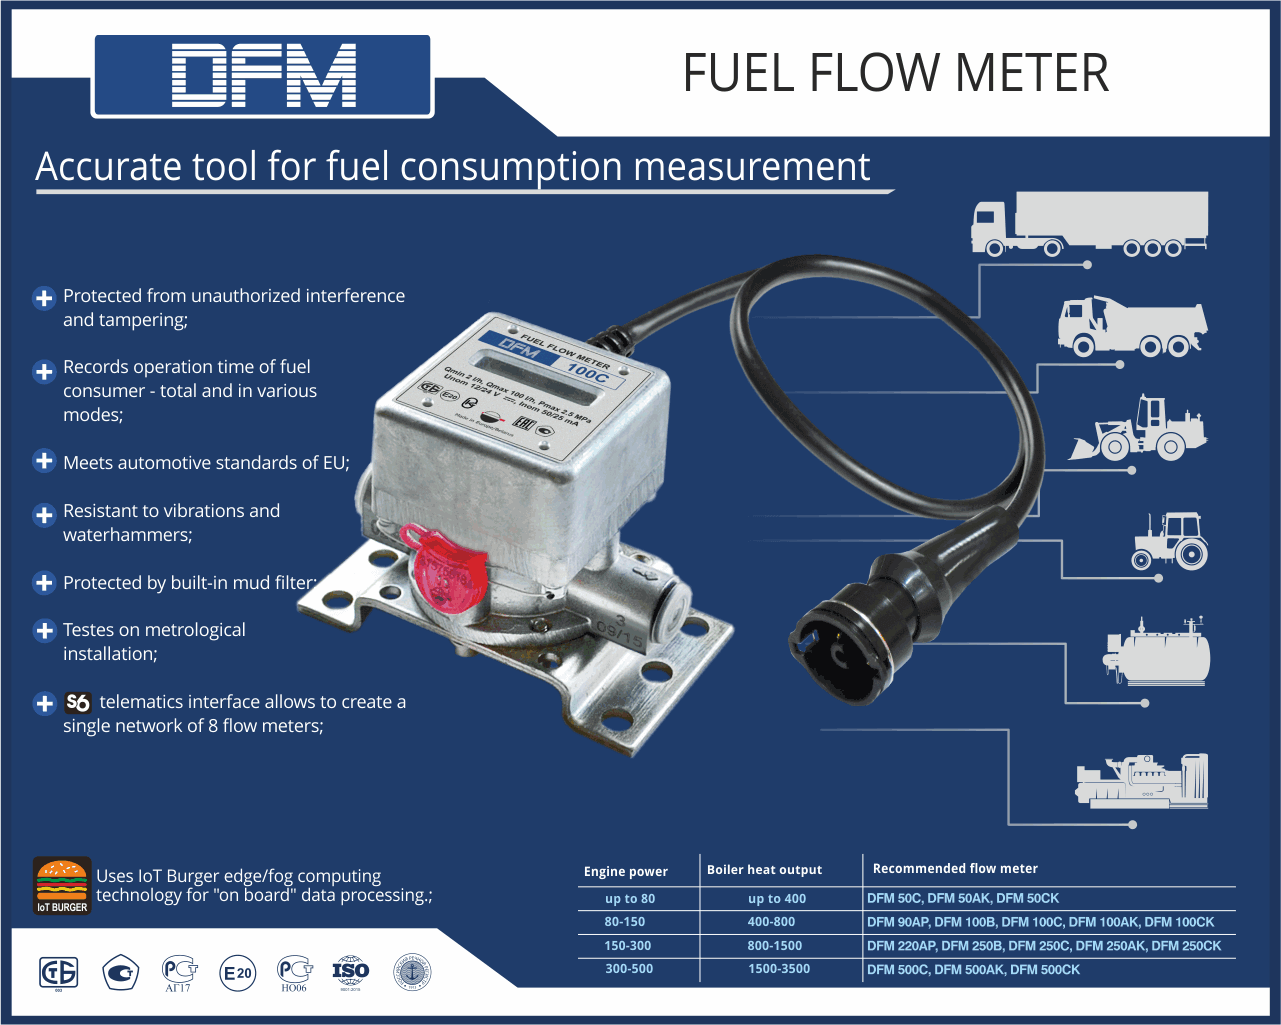 Advatanges of DFM flow meter